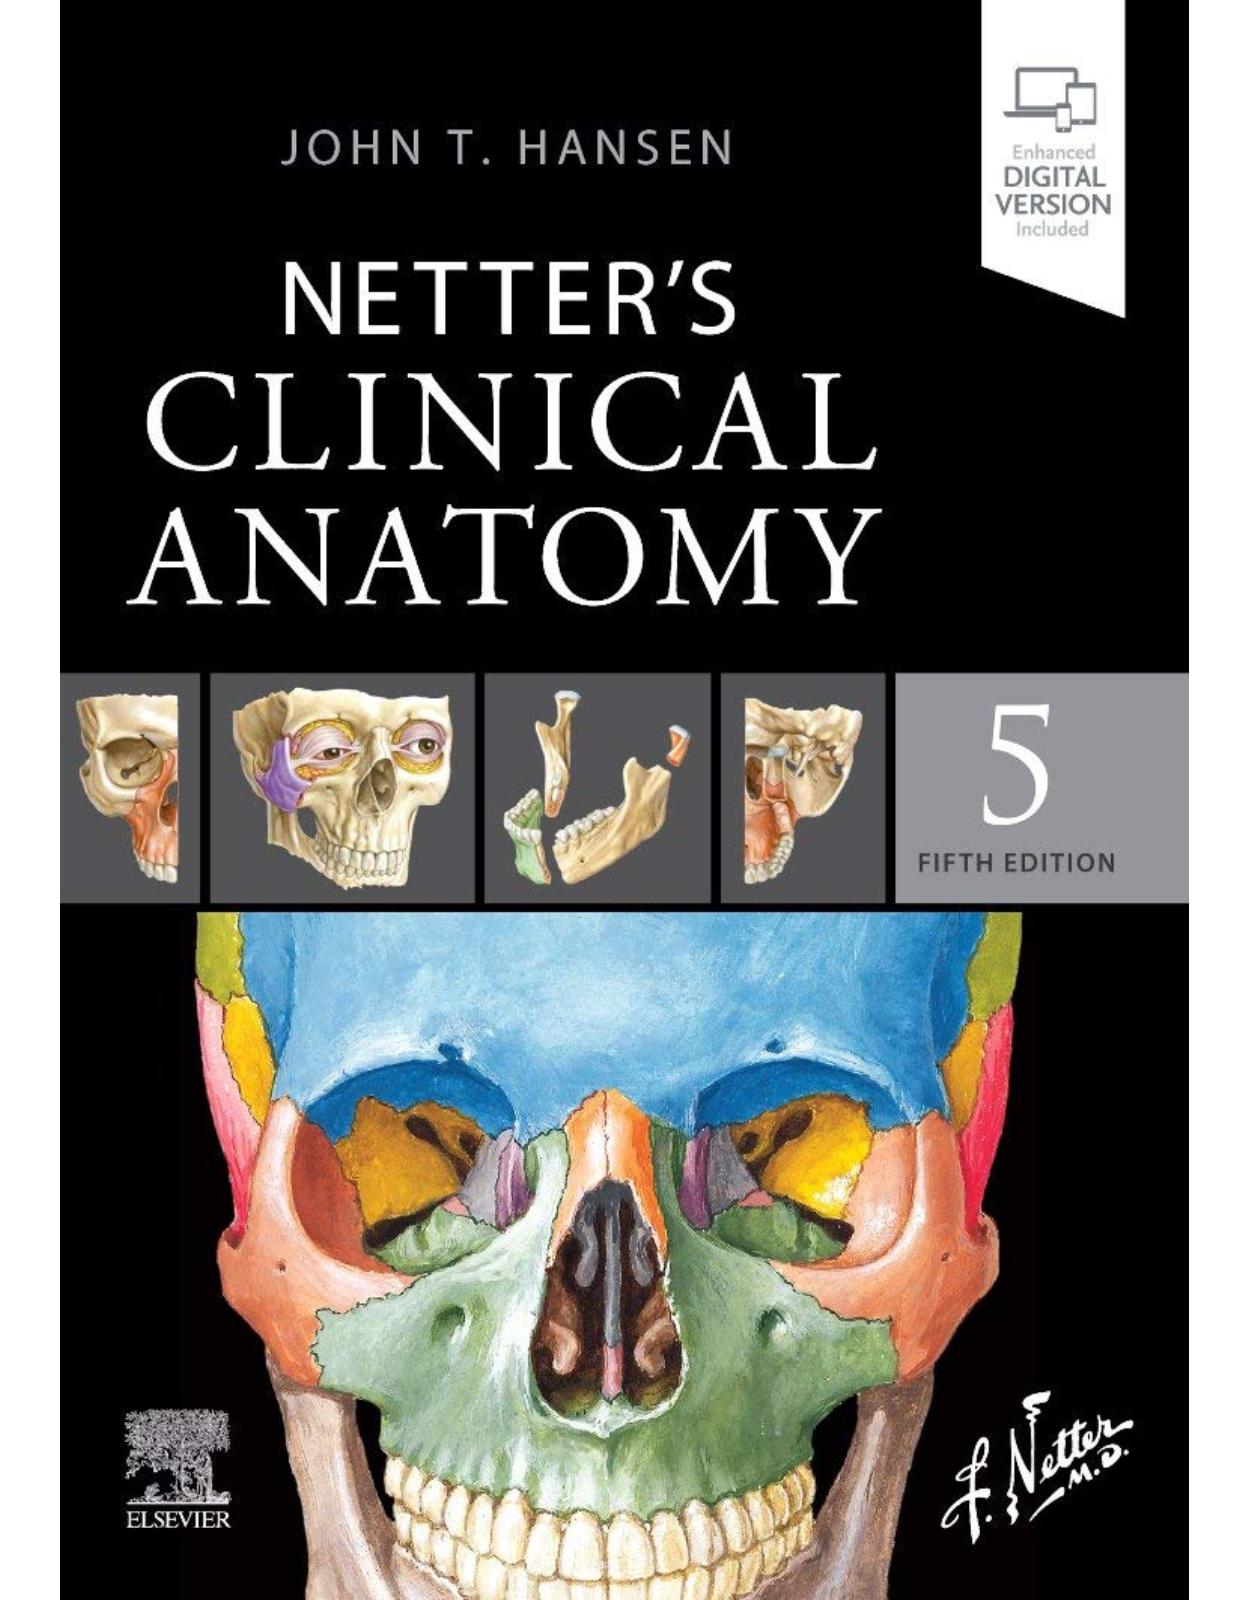 Netter’s Clinical Anatomy